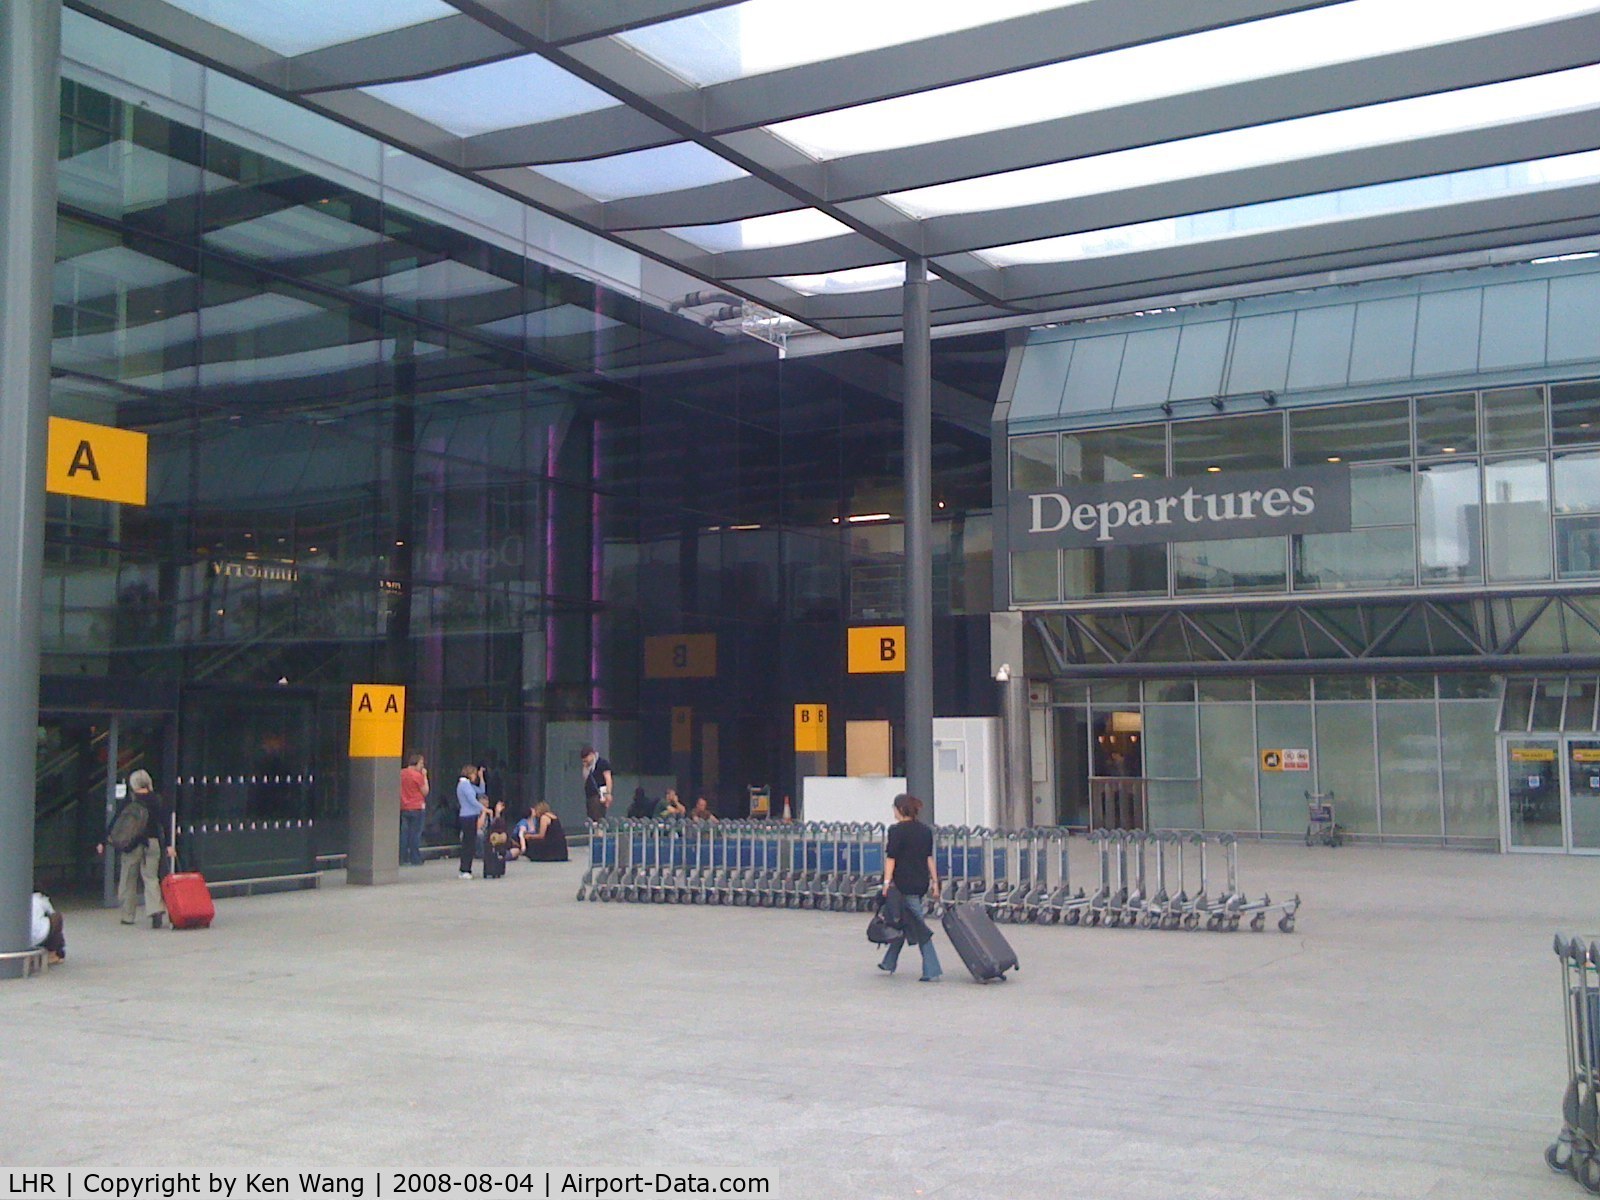 London Heathrow Airport, London, England United Kingdom (LHR) - Terminal 3 at London Heathrow